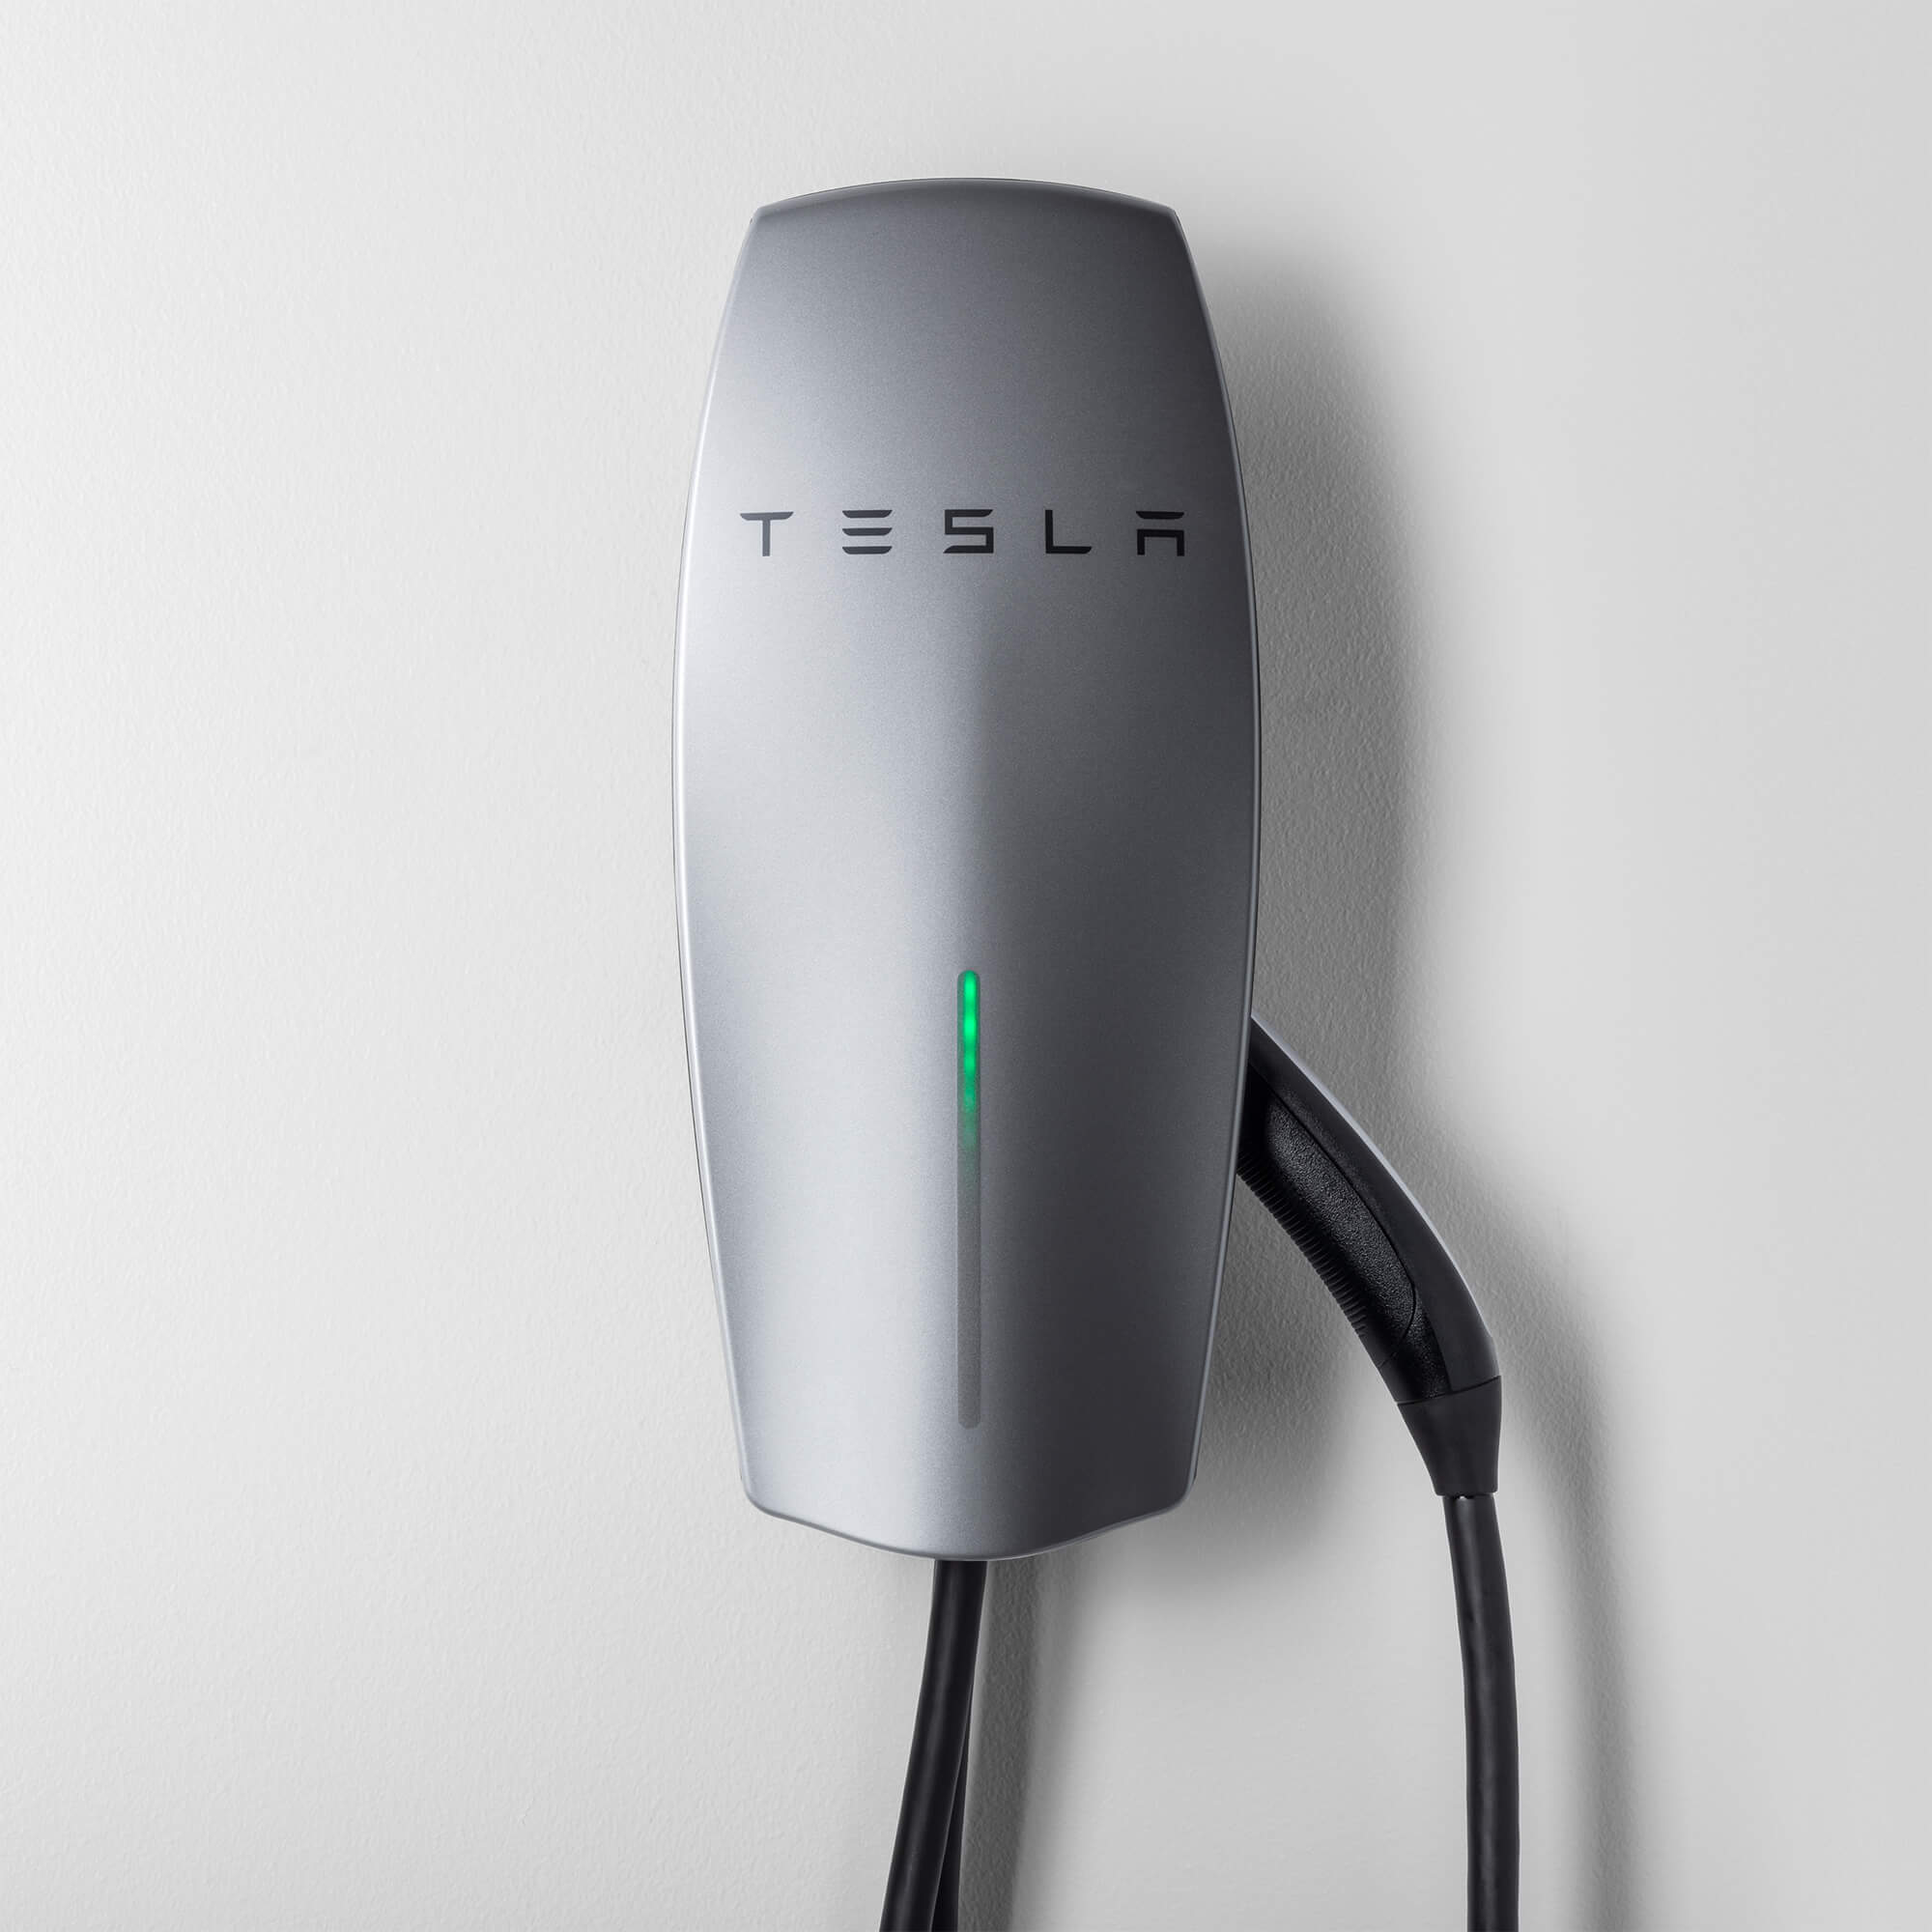 Домашняя зарядная станция. Тесла Чарджер. Электромобиль Тесла на зарядке. Зарядка Tesla Wall Connector. Тесла j1772 Wall Connector - зарядка для электрокаров.